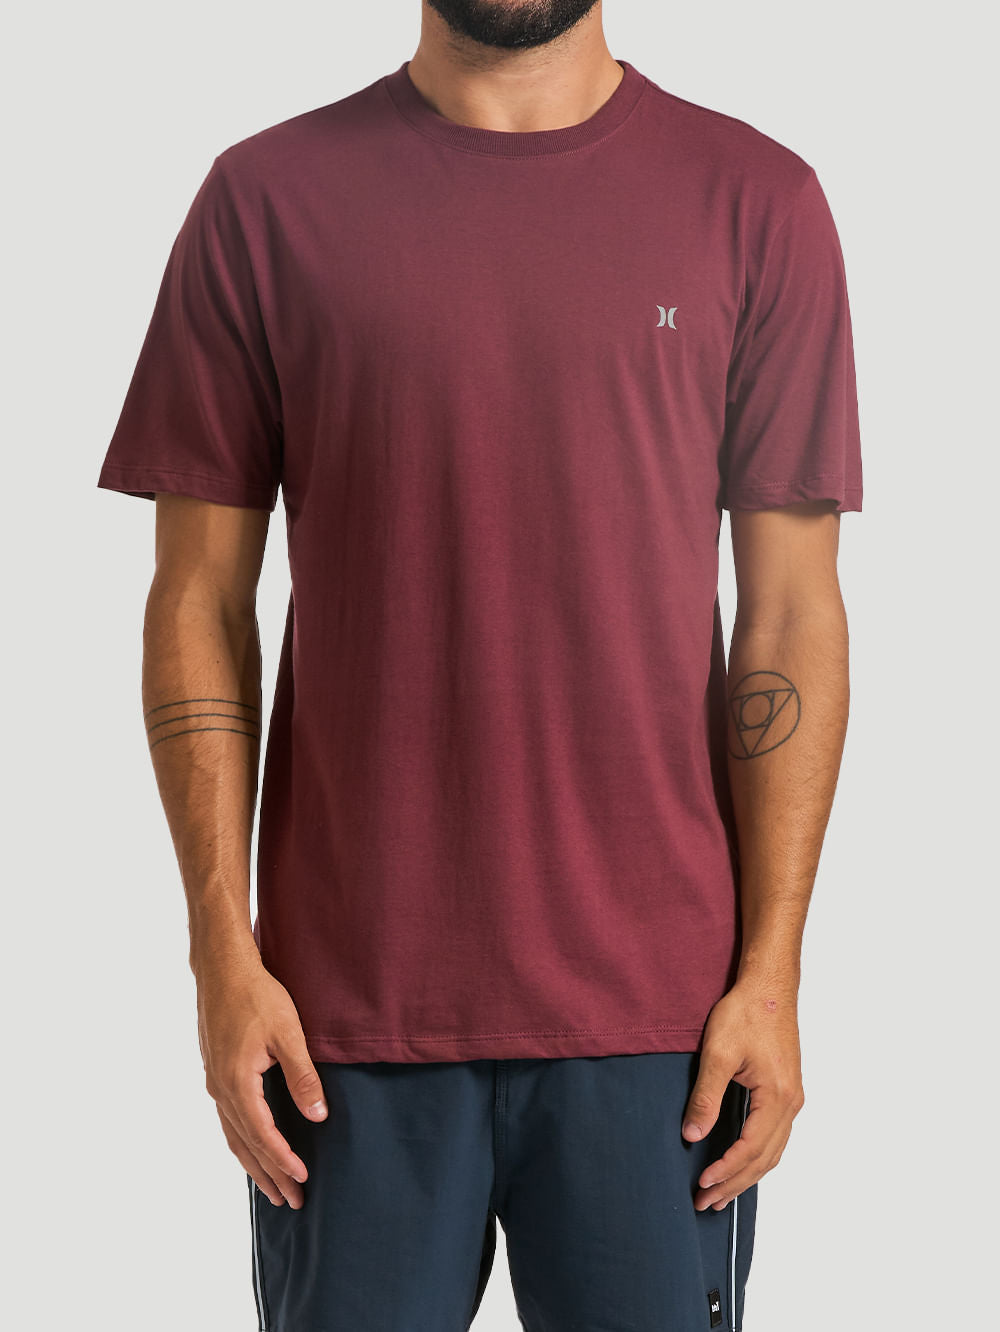 Camiseta Hurley Mini Icon Vinho